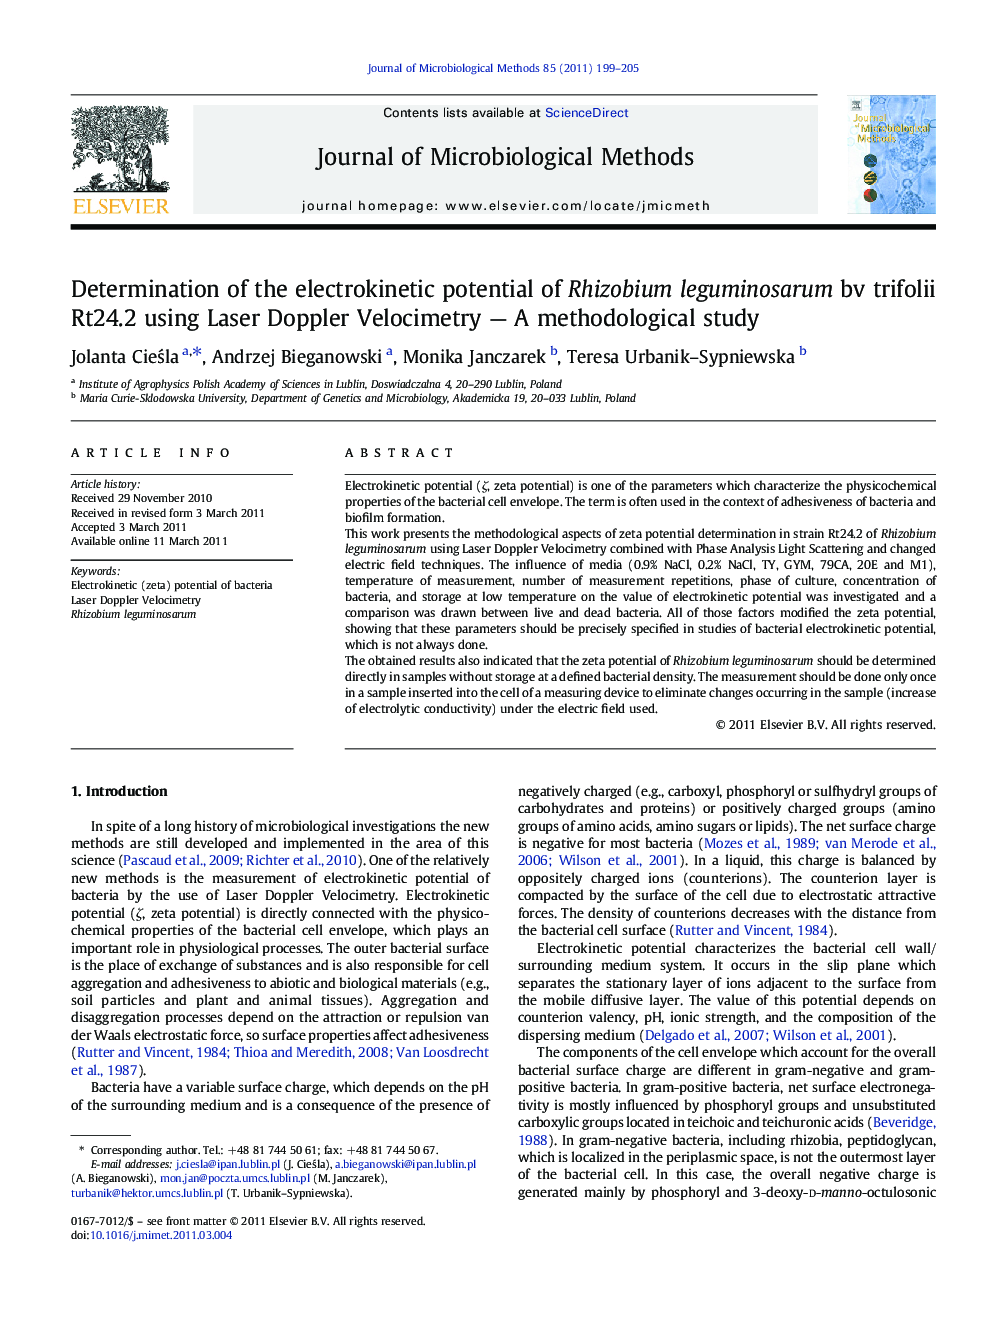 Determination of the electrokinetic potential of Rhizobium leguminosarum bv trifolii Rt24.2 using Laser Doppler Velocimetry - A methodological study